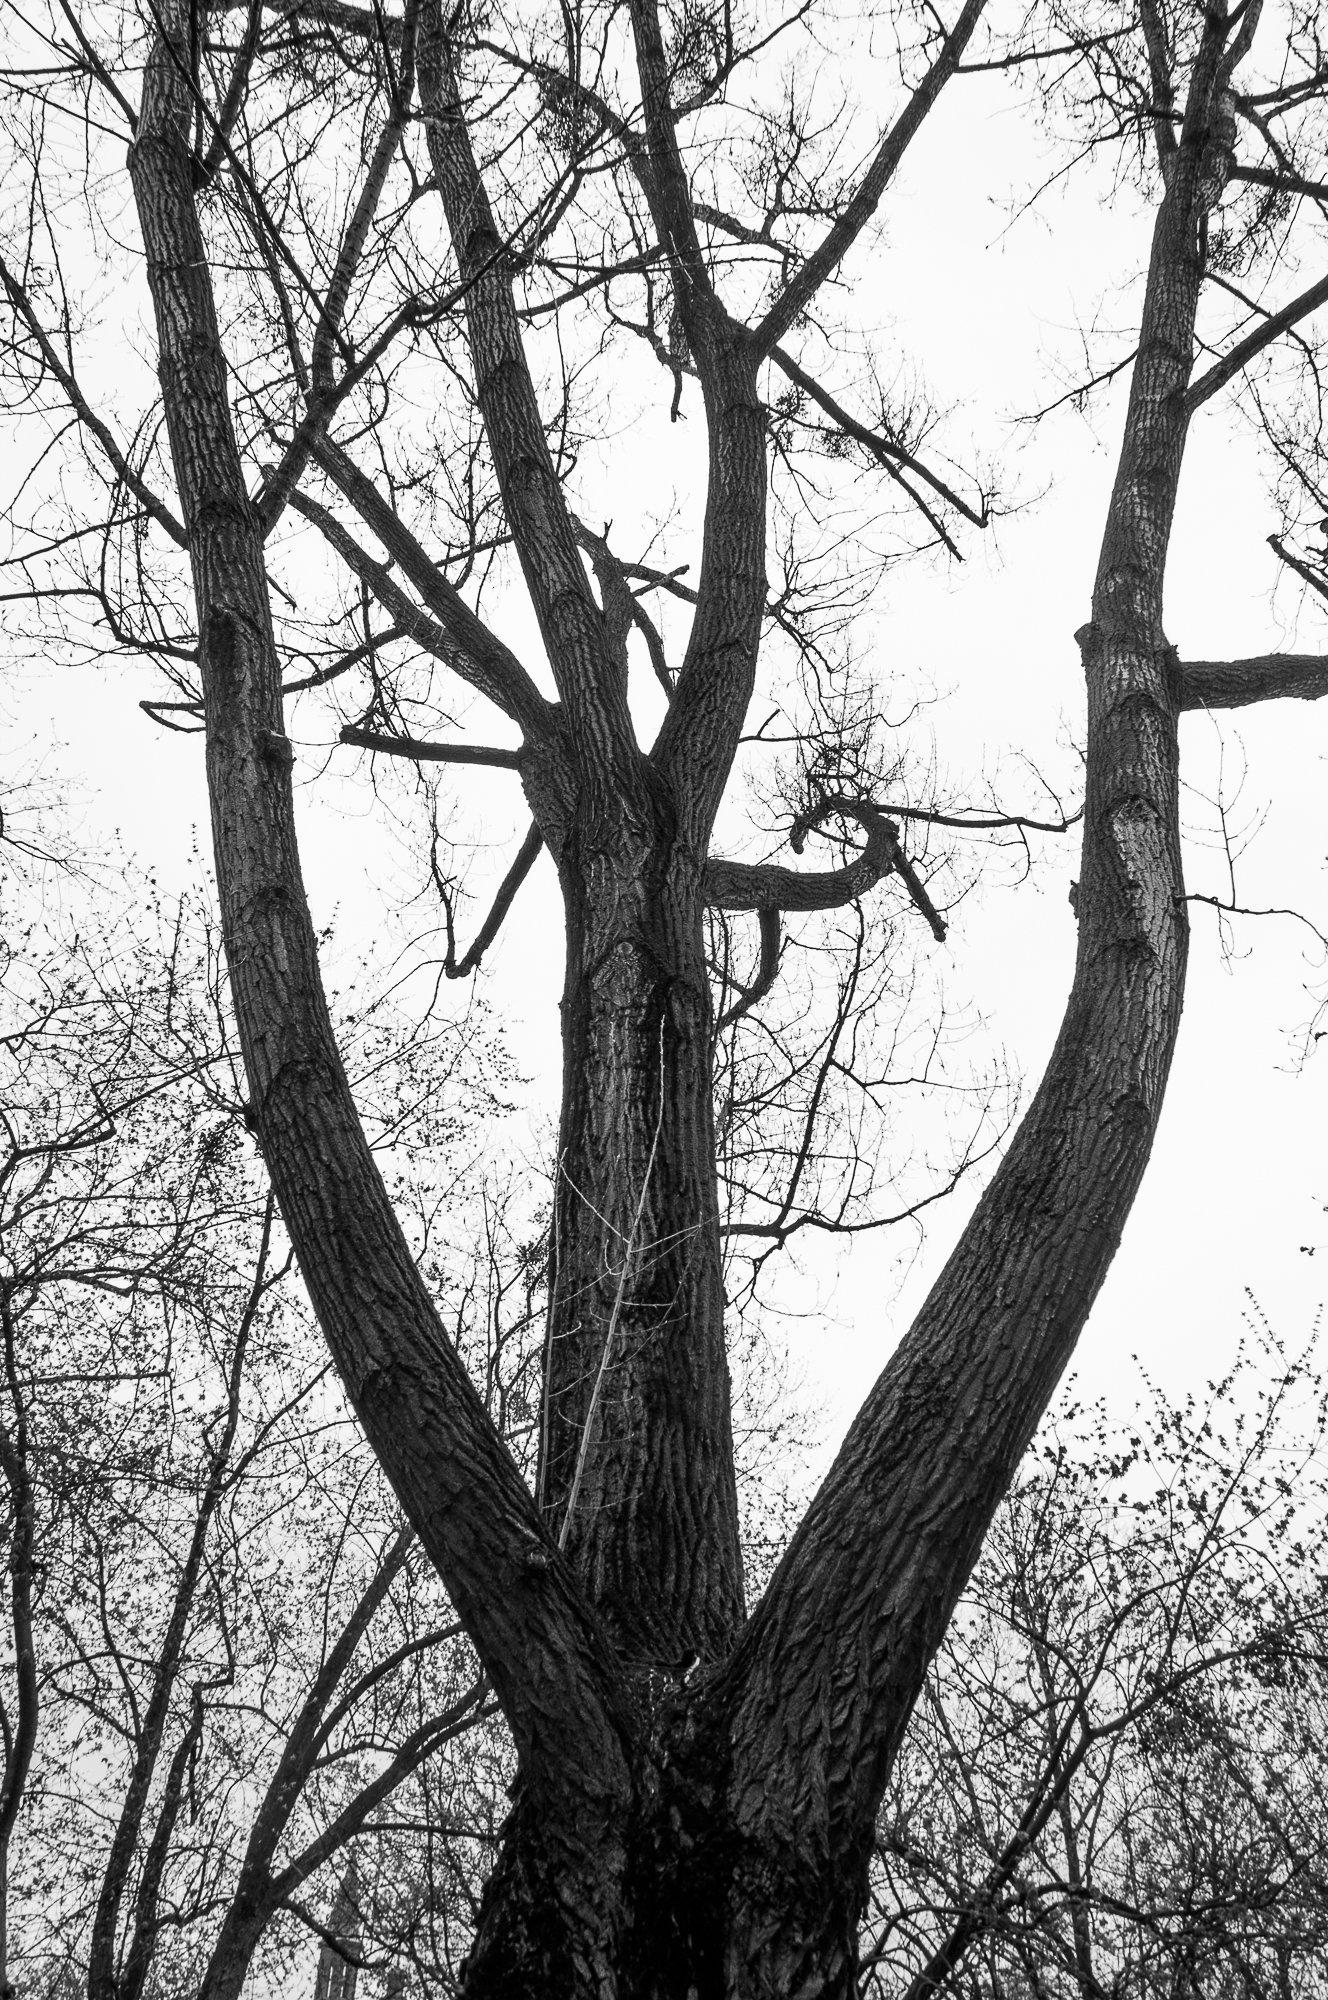 Adam Mazek Photography Warsaw (Warszawa) 2019. Post: "Nothing last forever." Minimalism. Tree.